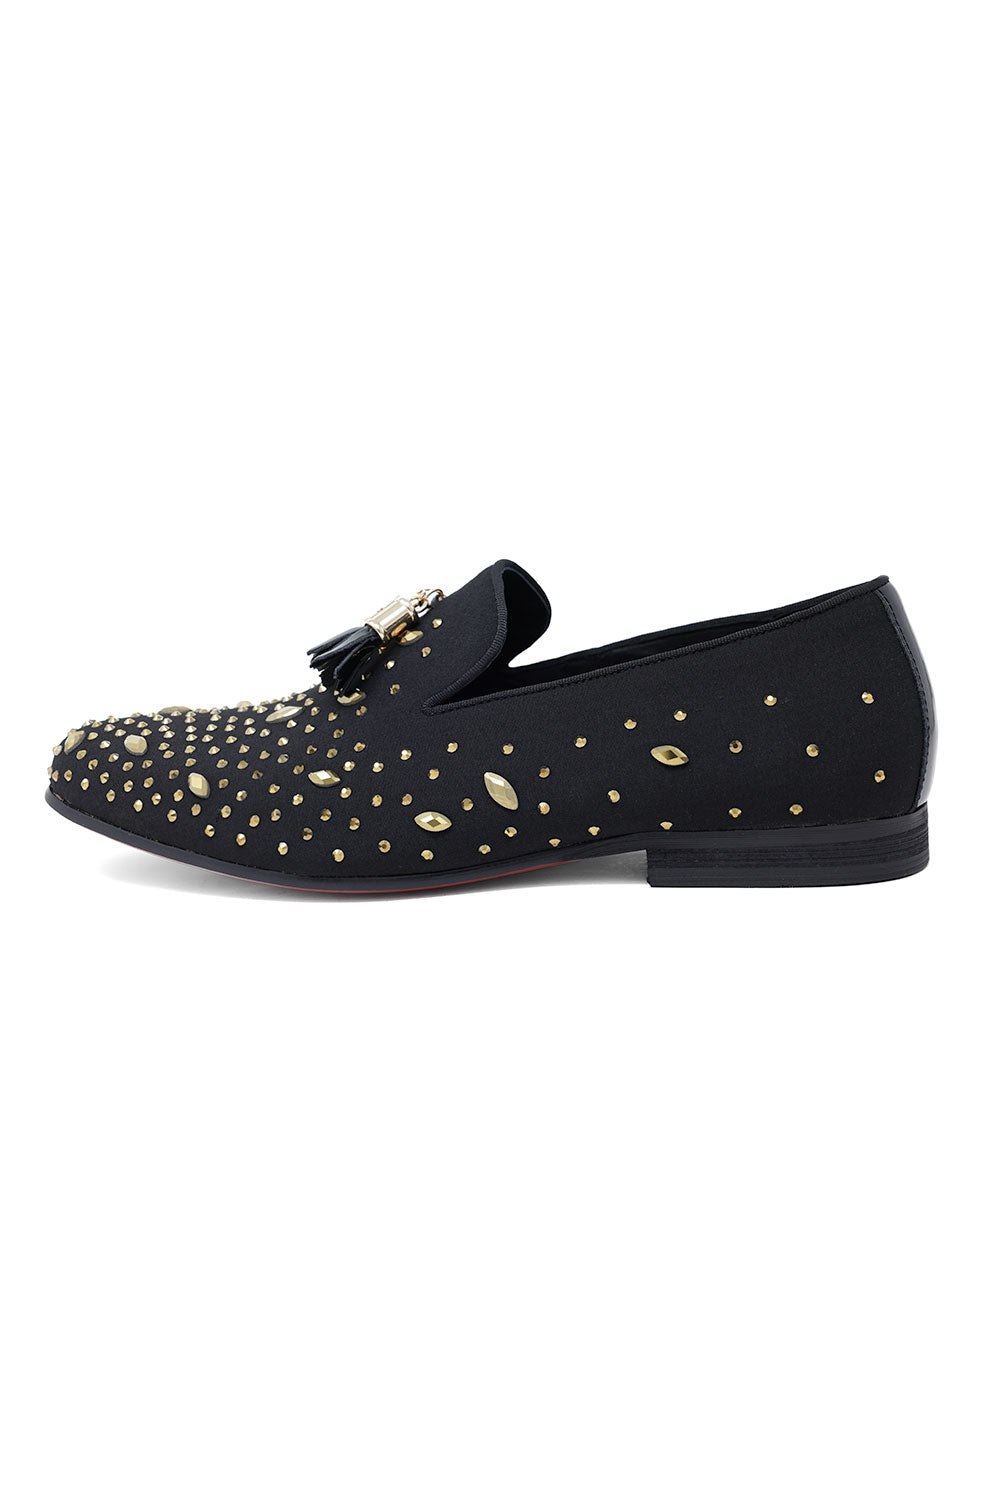 BARABAS Men's Rhinestone Dimond Tassel Loafer Dress Shoes SH3080SH3080 Black Gold